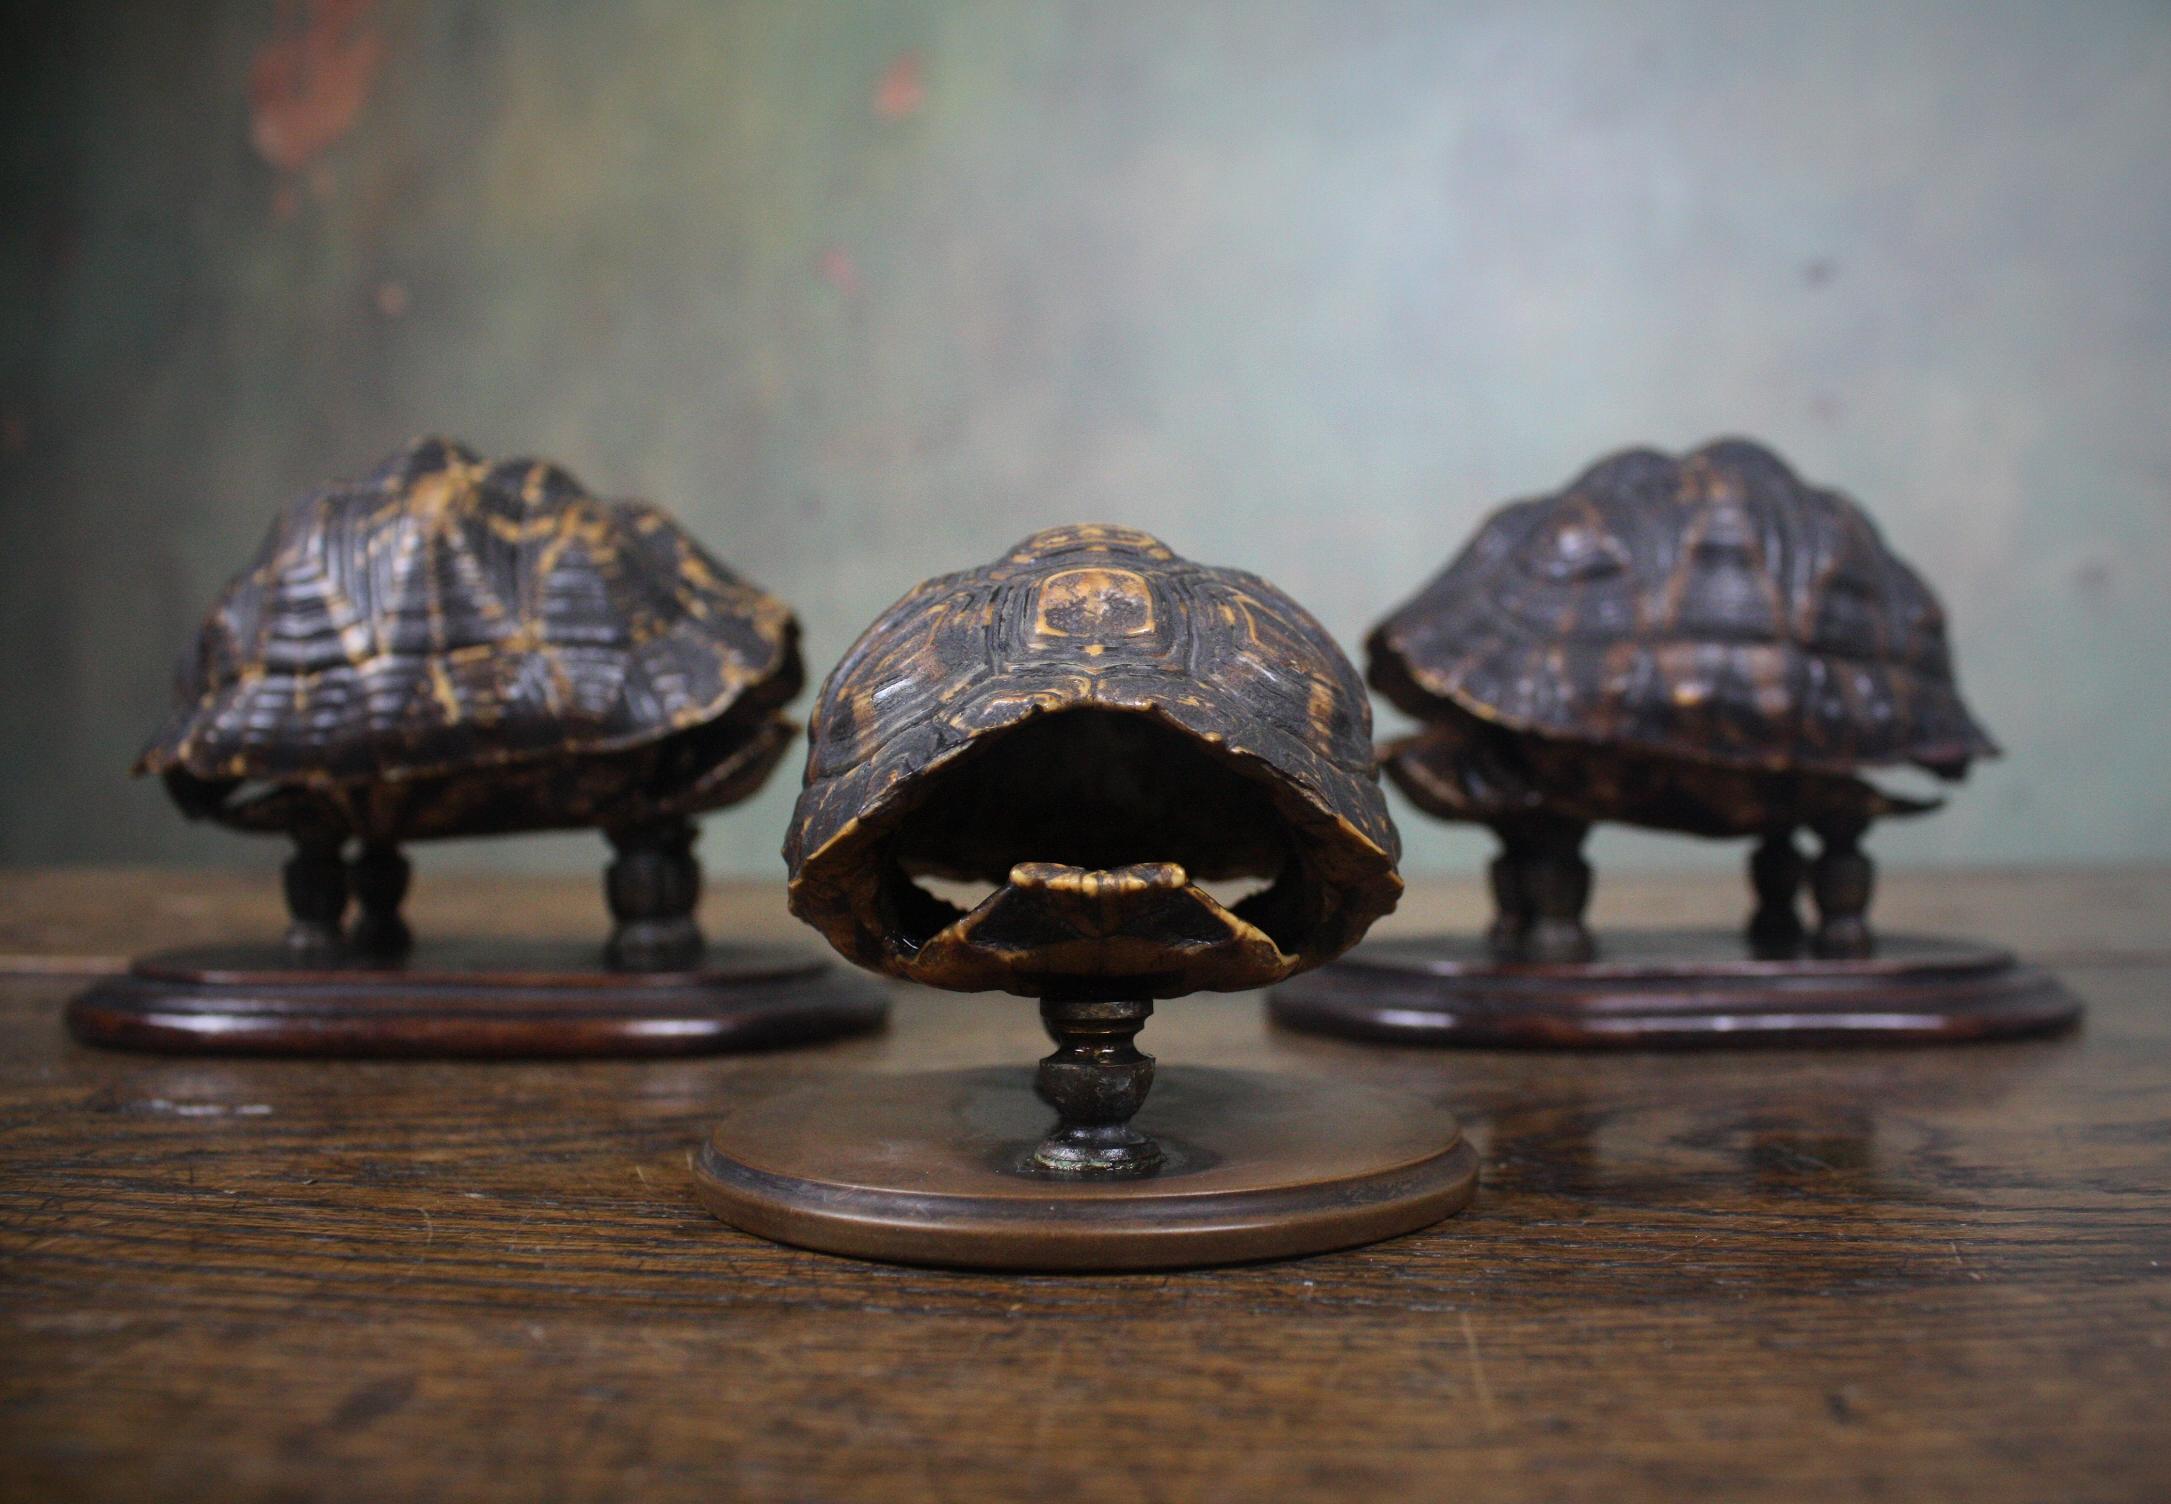 Late Victorian 19th Century Trio of Tortoise Specimens Taxidermy Victorian Curiosity